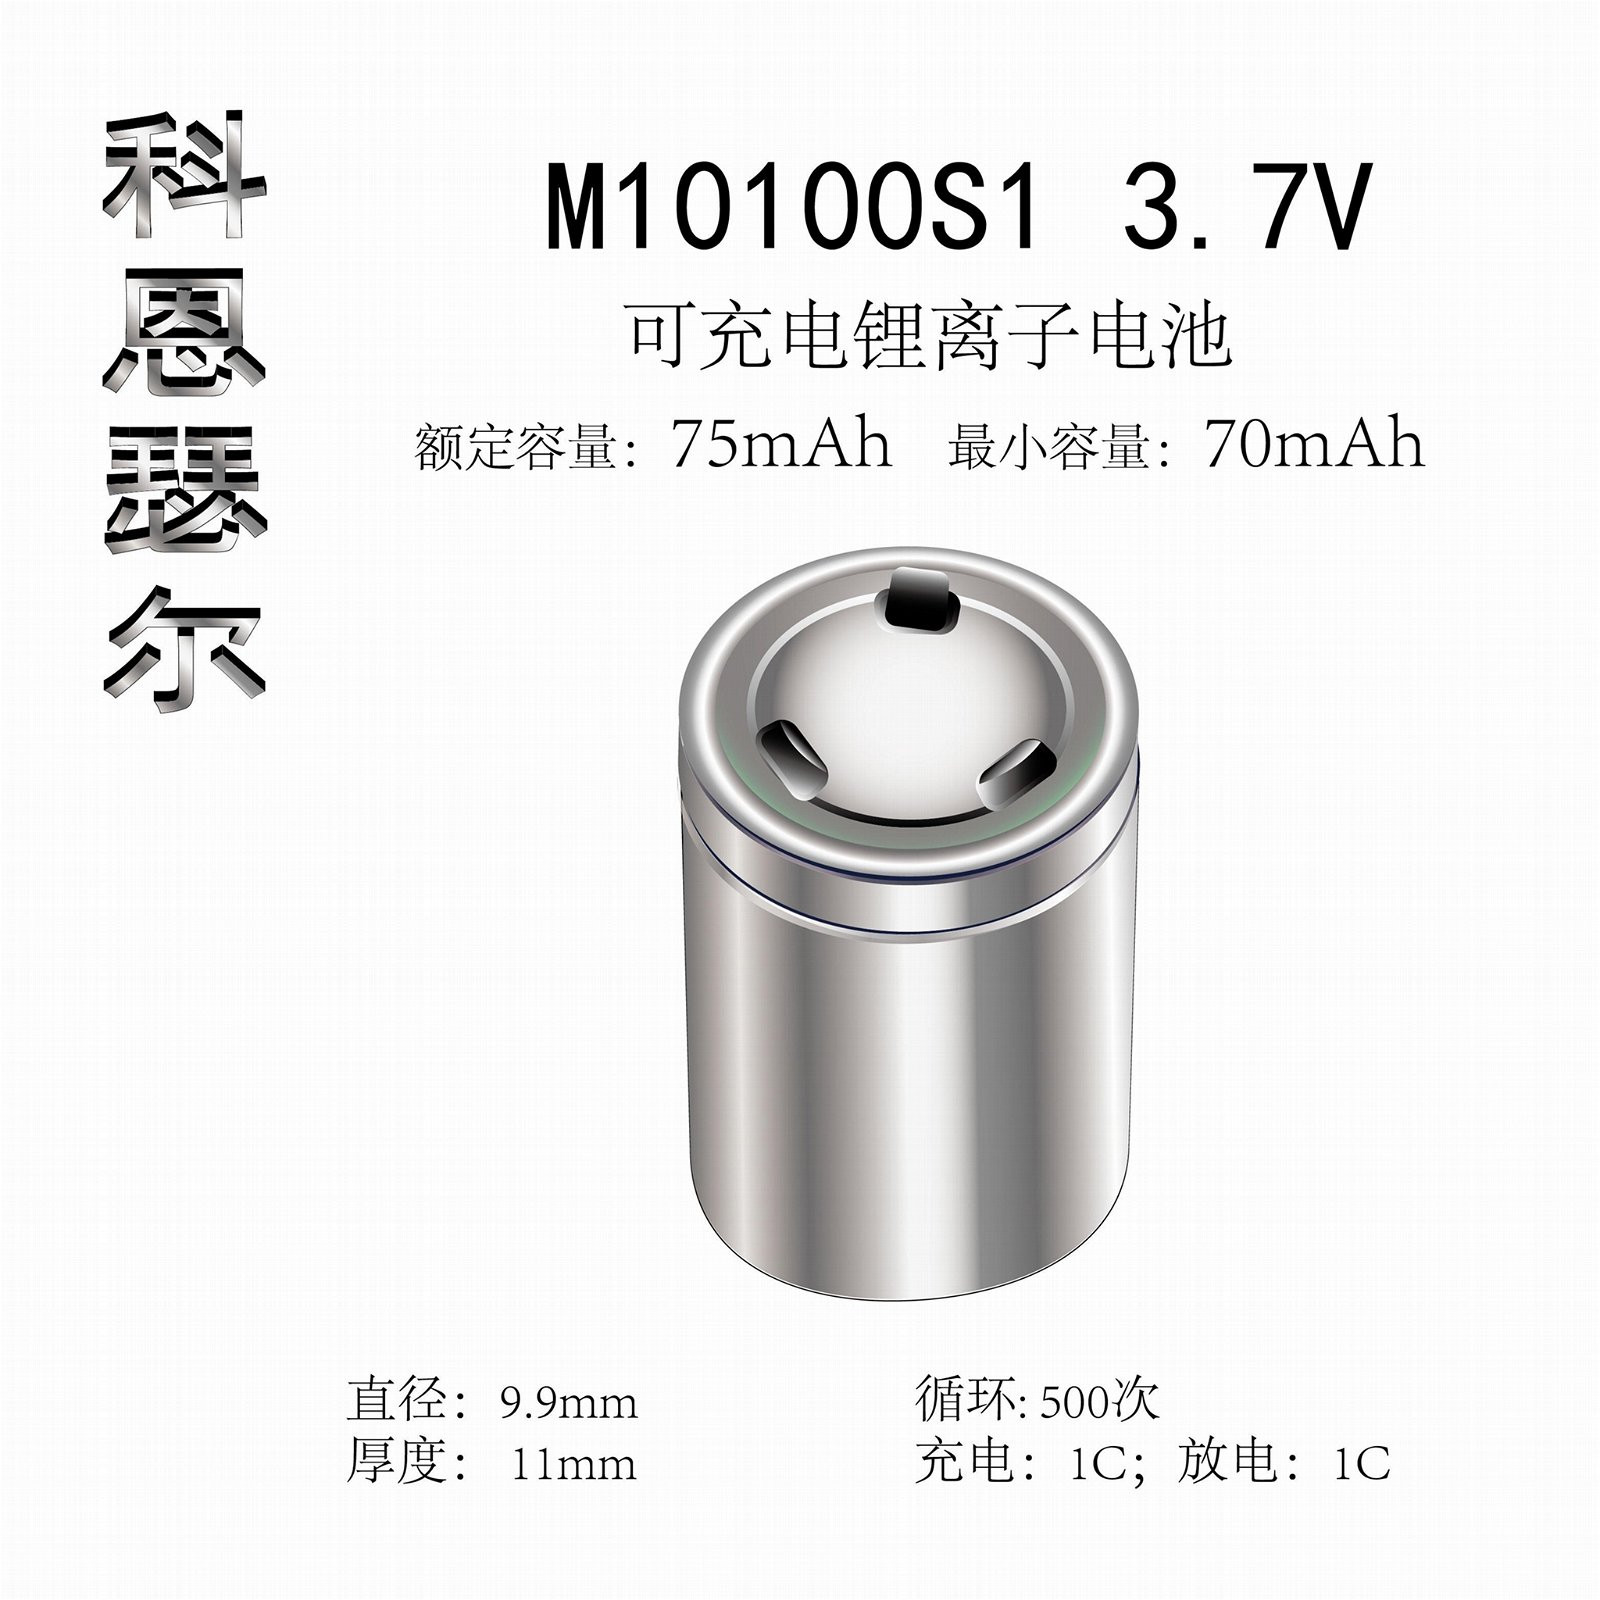 M10100 3.7V 75mAh TWS藍牙耳機鋼柱鋰離子電池 2